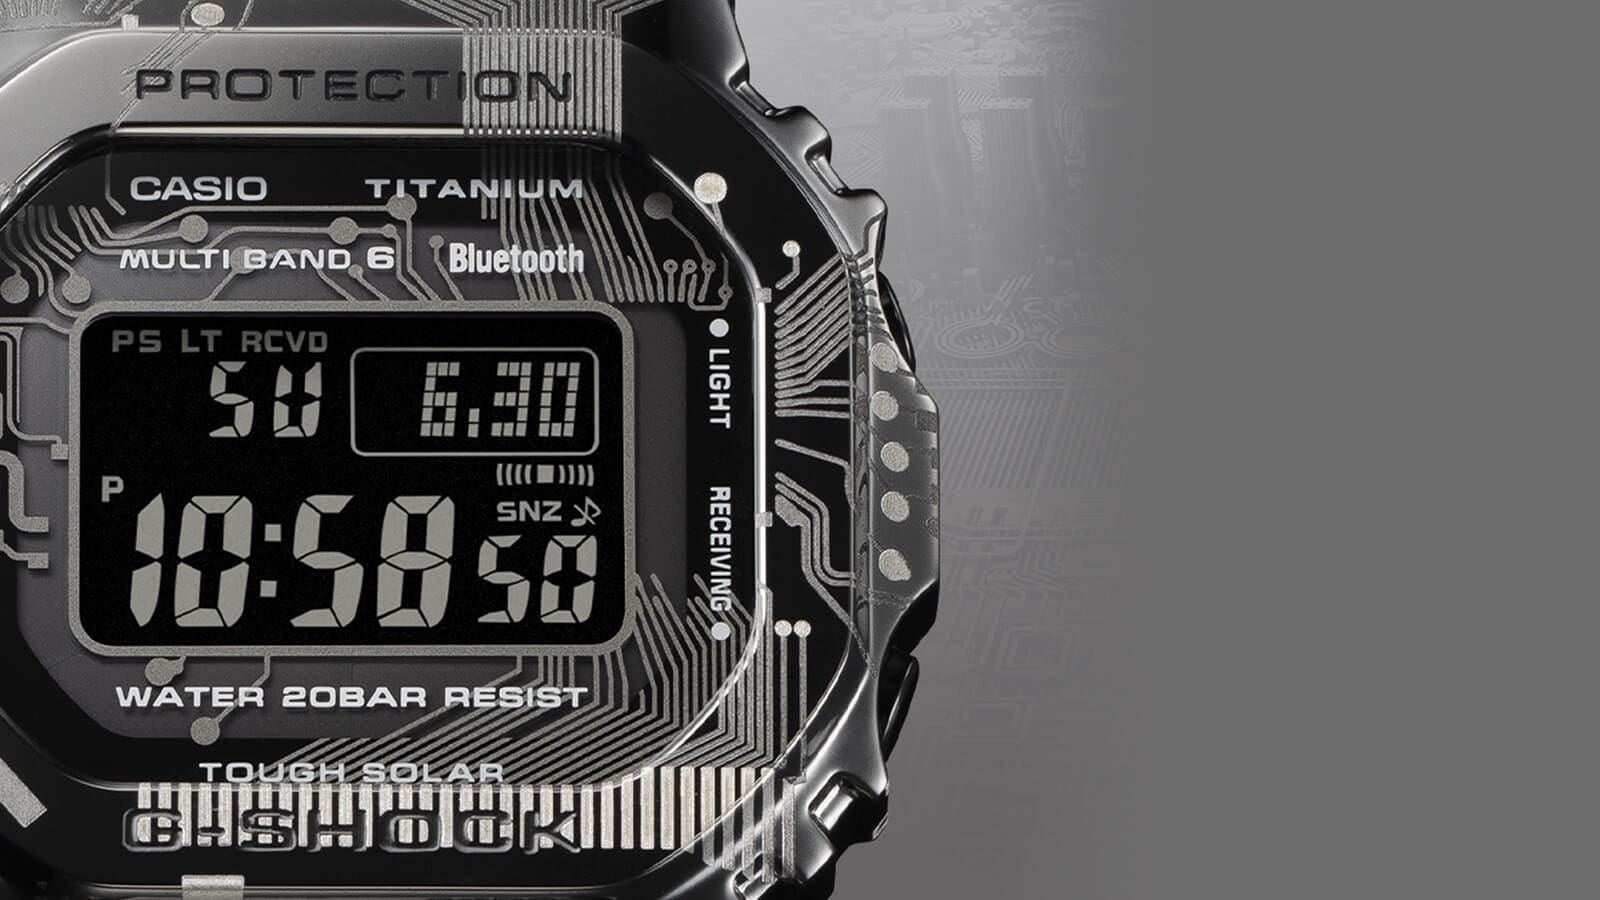 GMWB5000TCC digital watch on a gray background